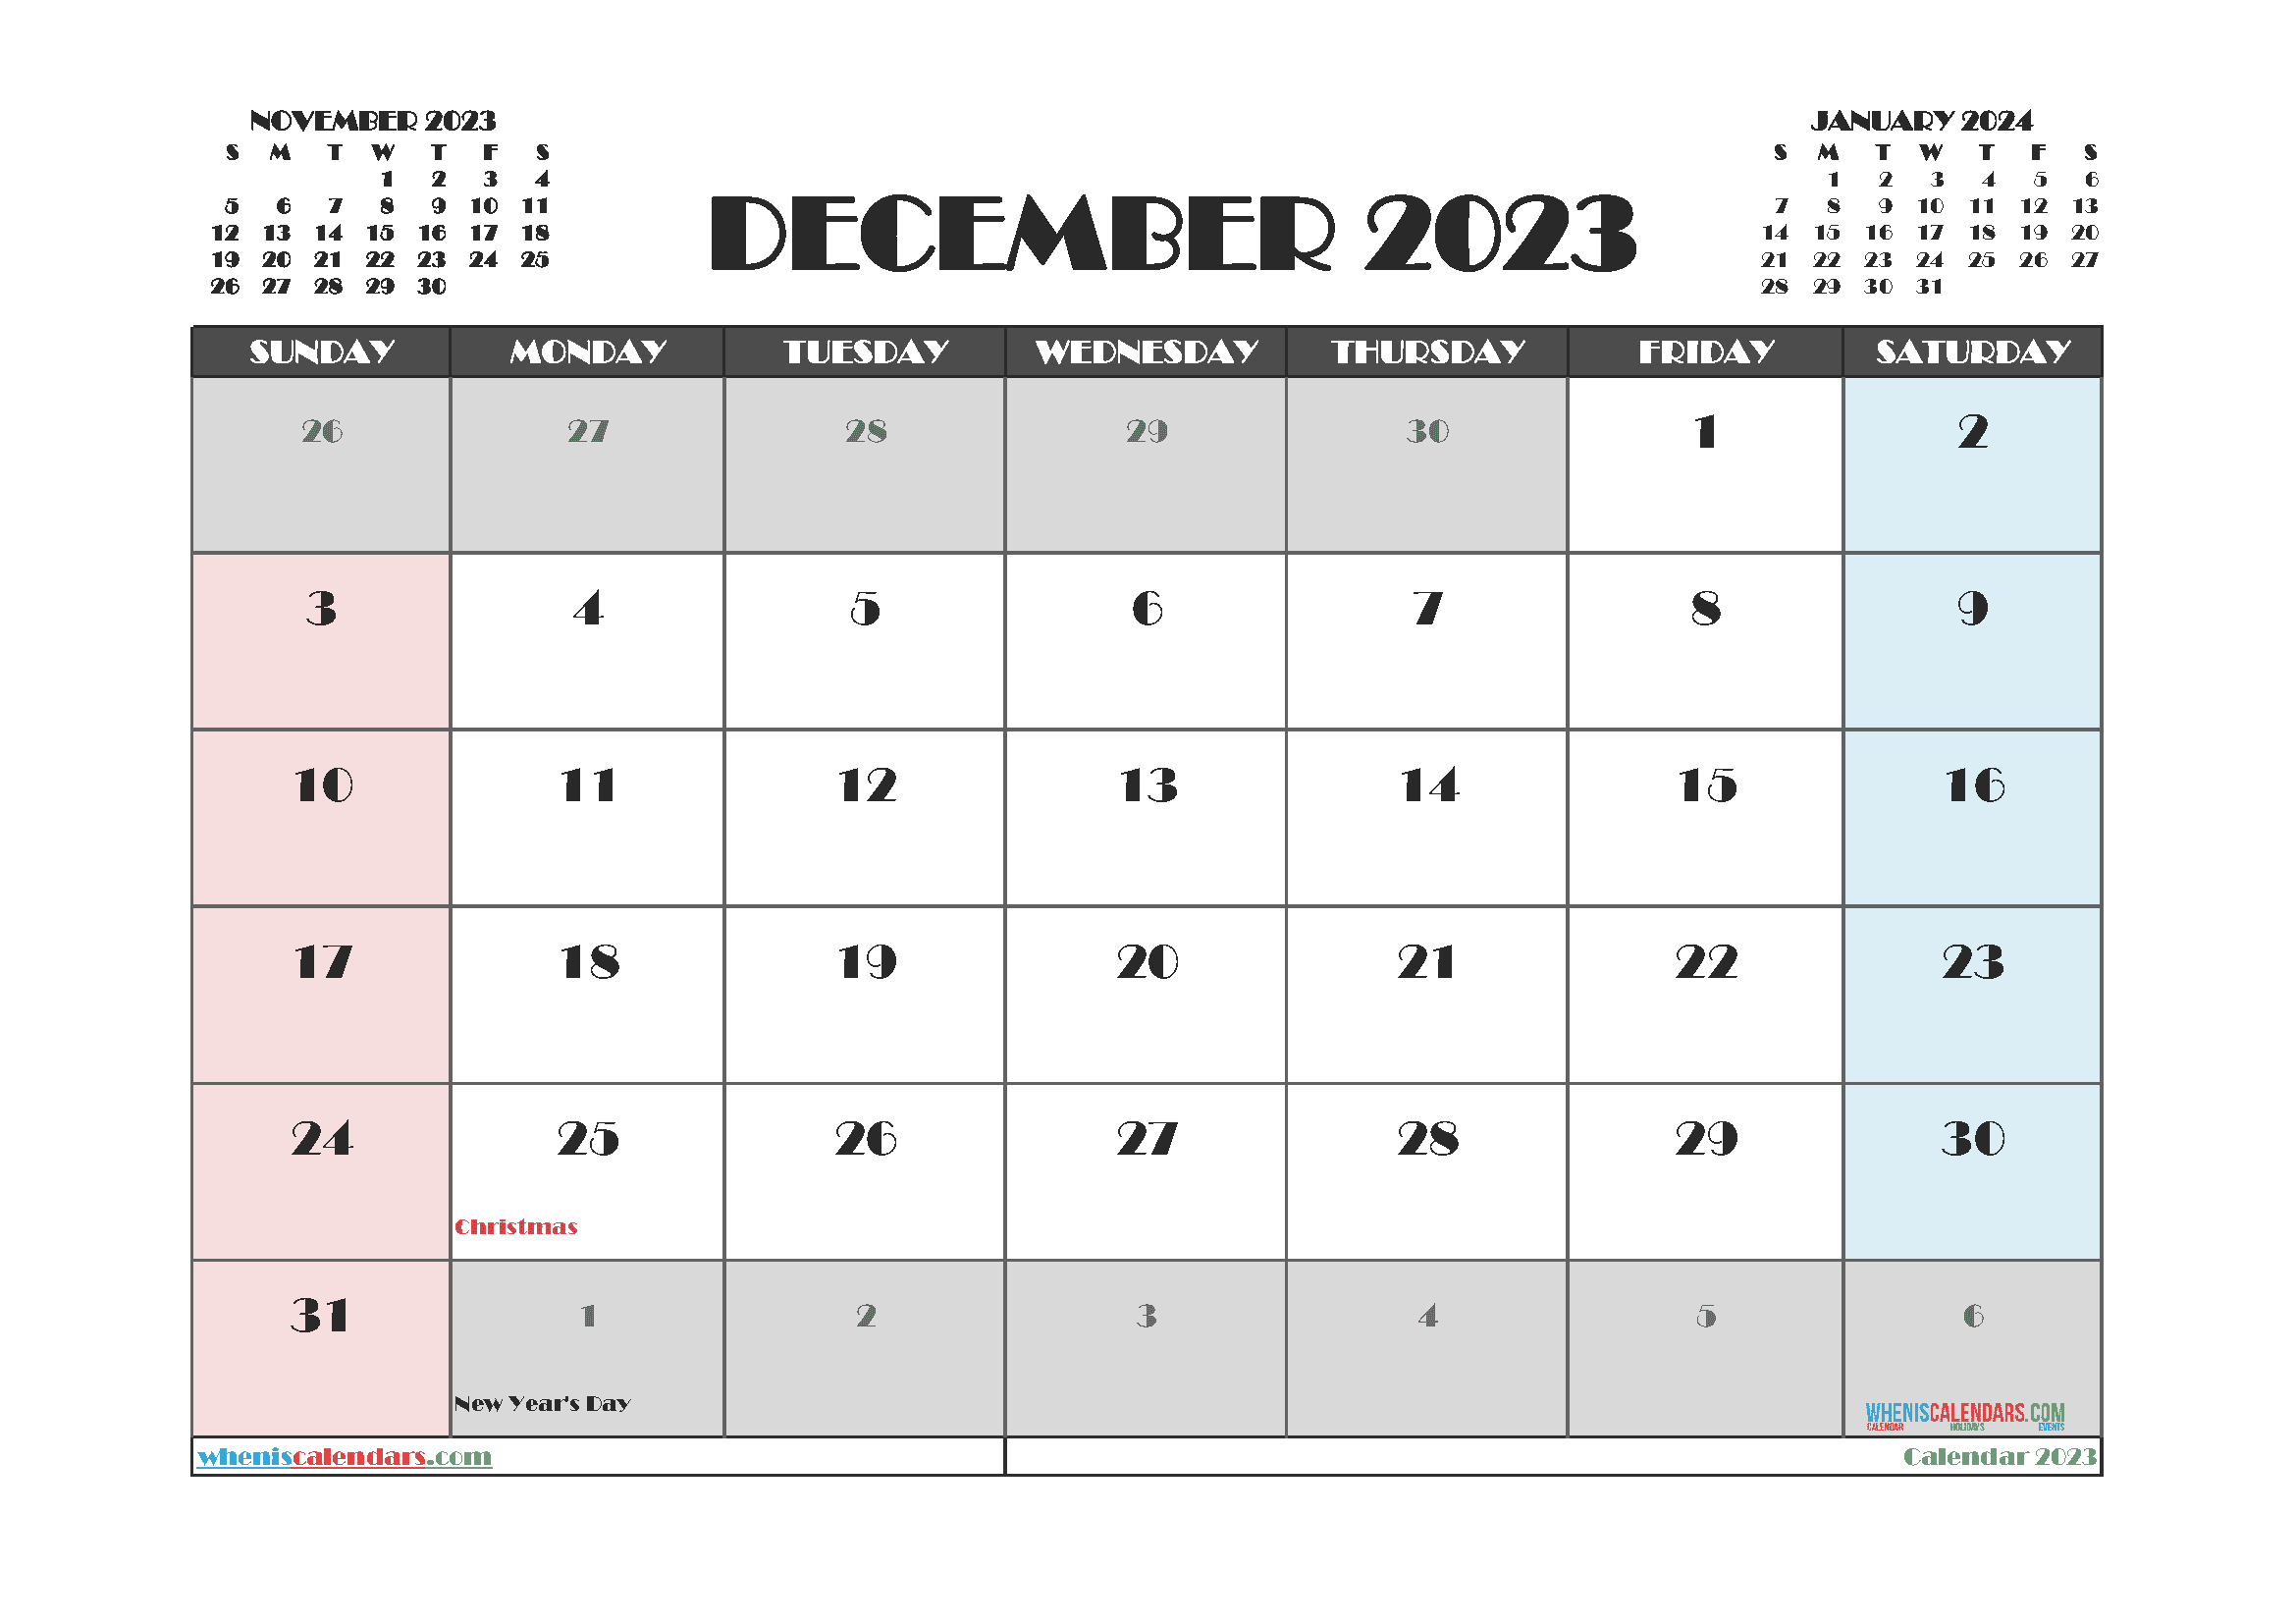 Free Printable December 2023 Calendar with Holidays PDF in Landscape